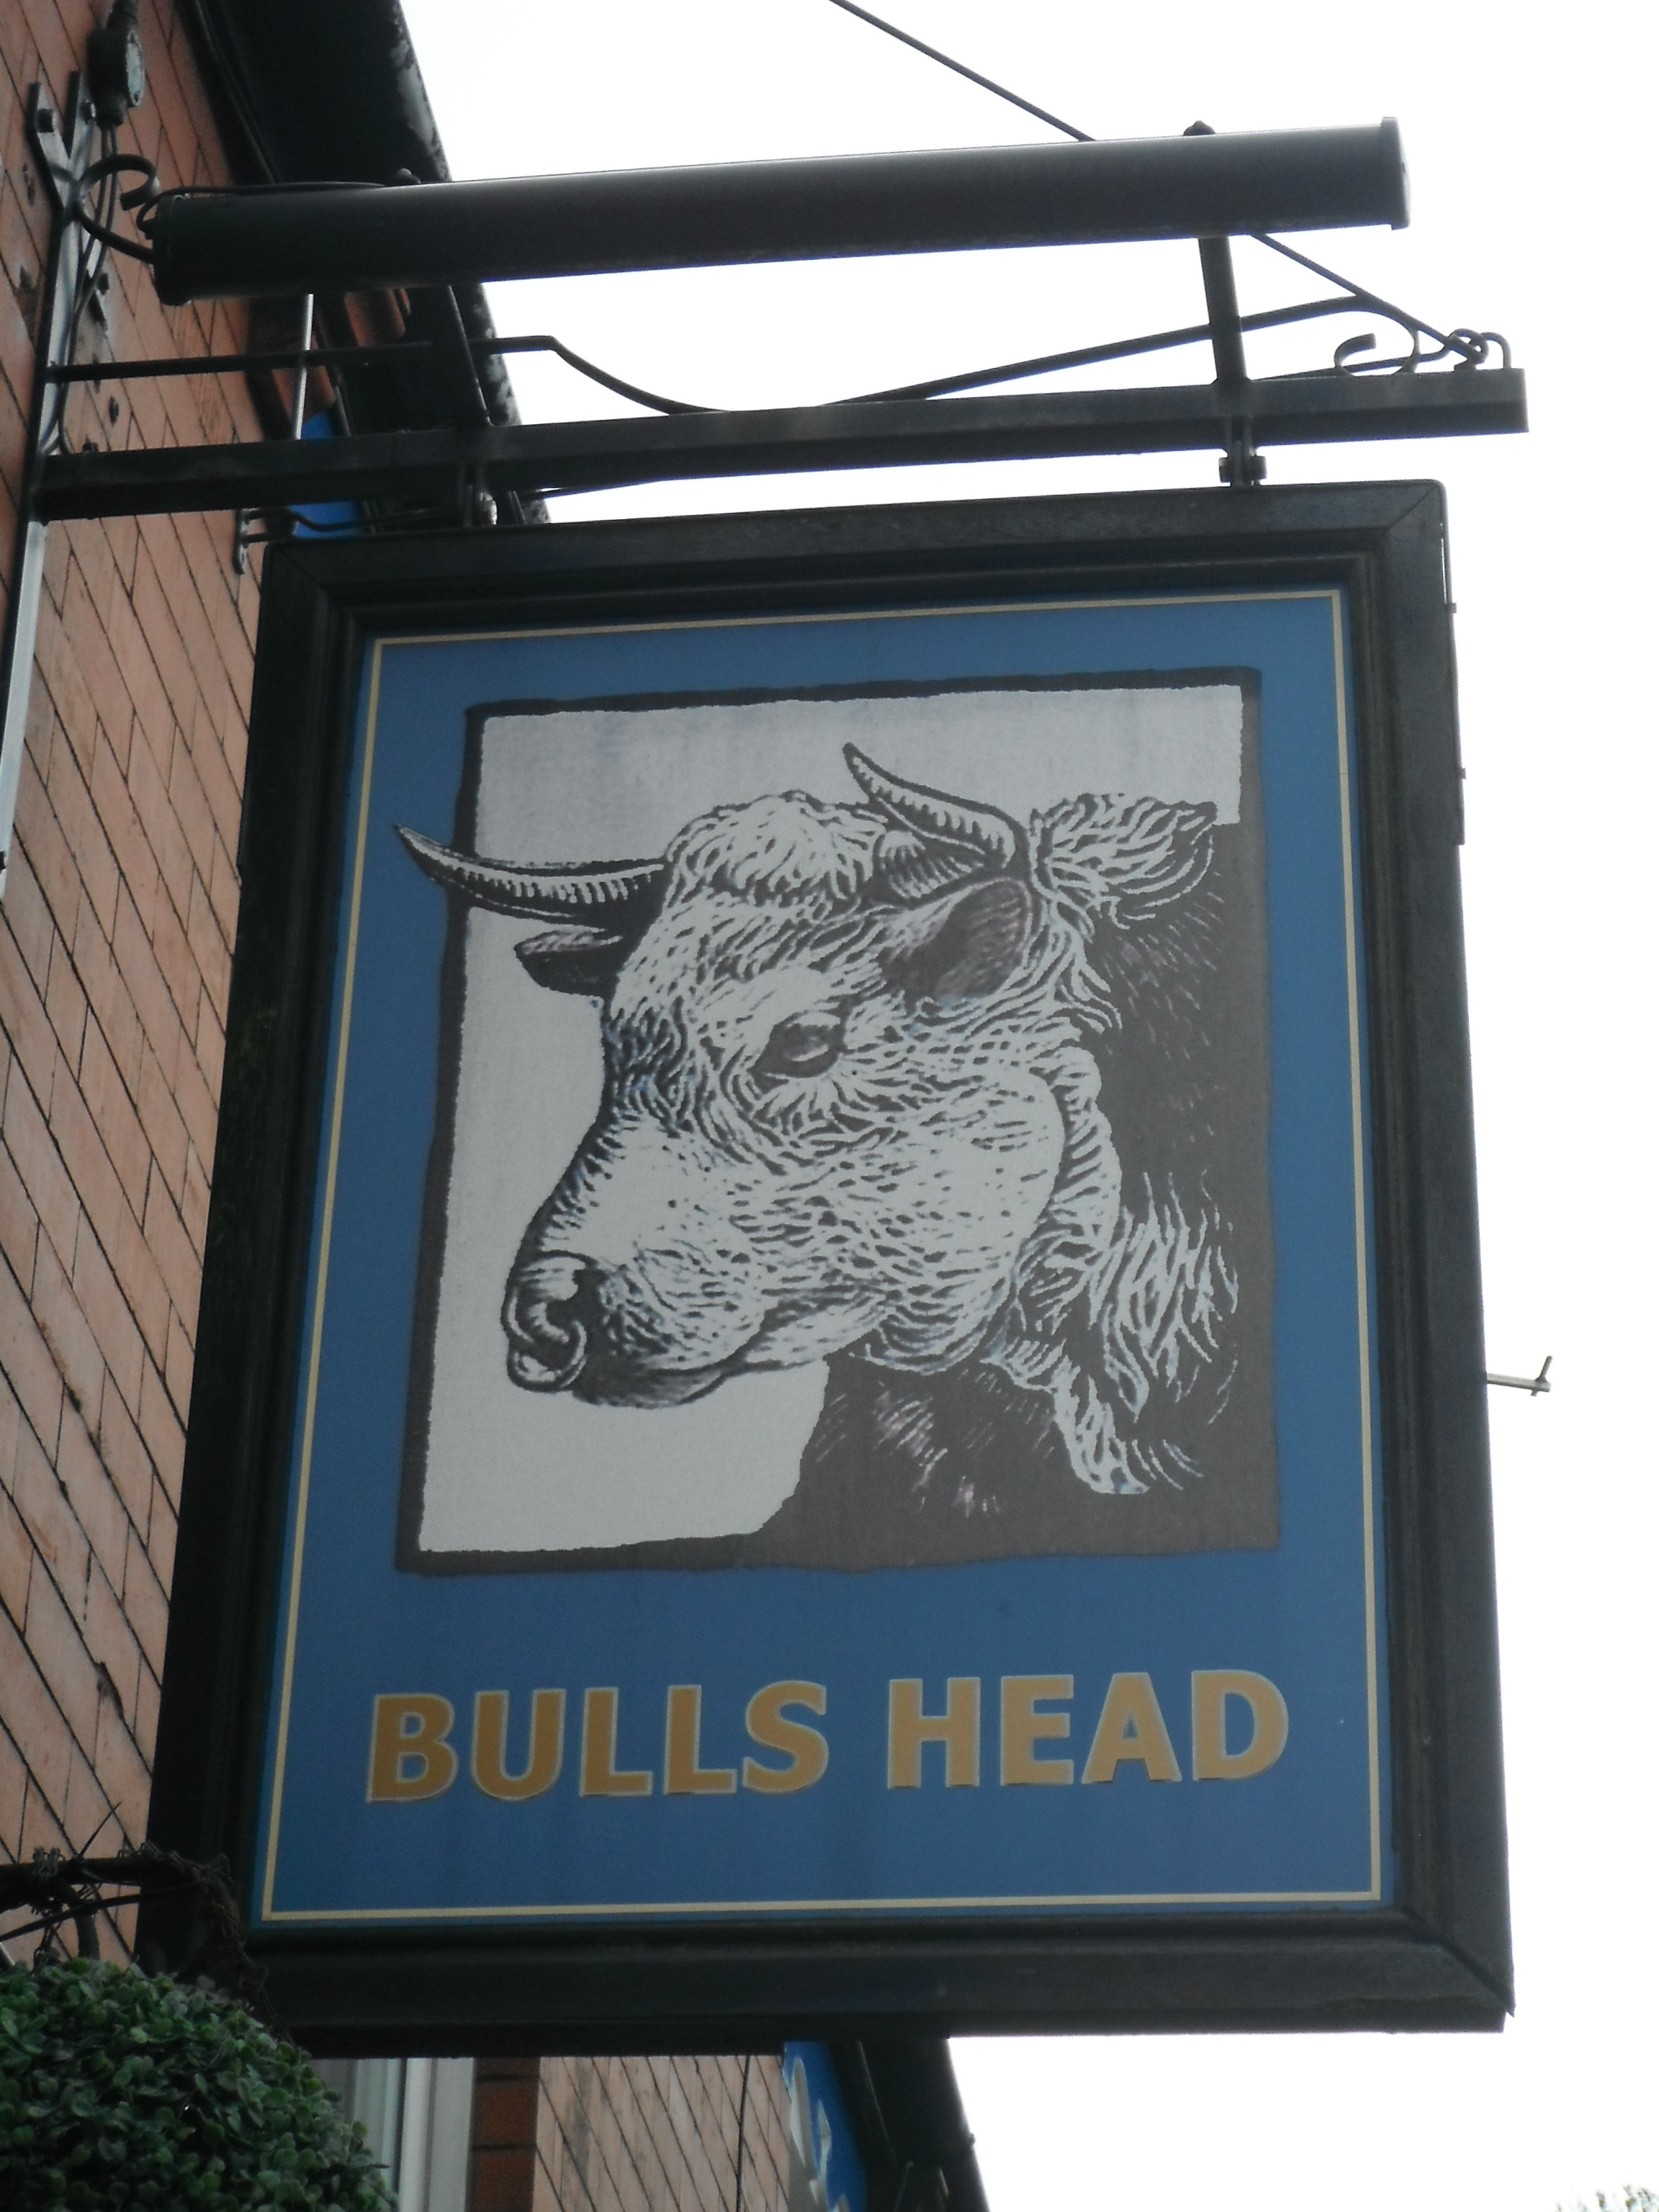 Photo taken by me – The Bulls Head Inn Sign – Oldham